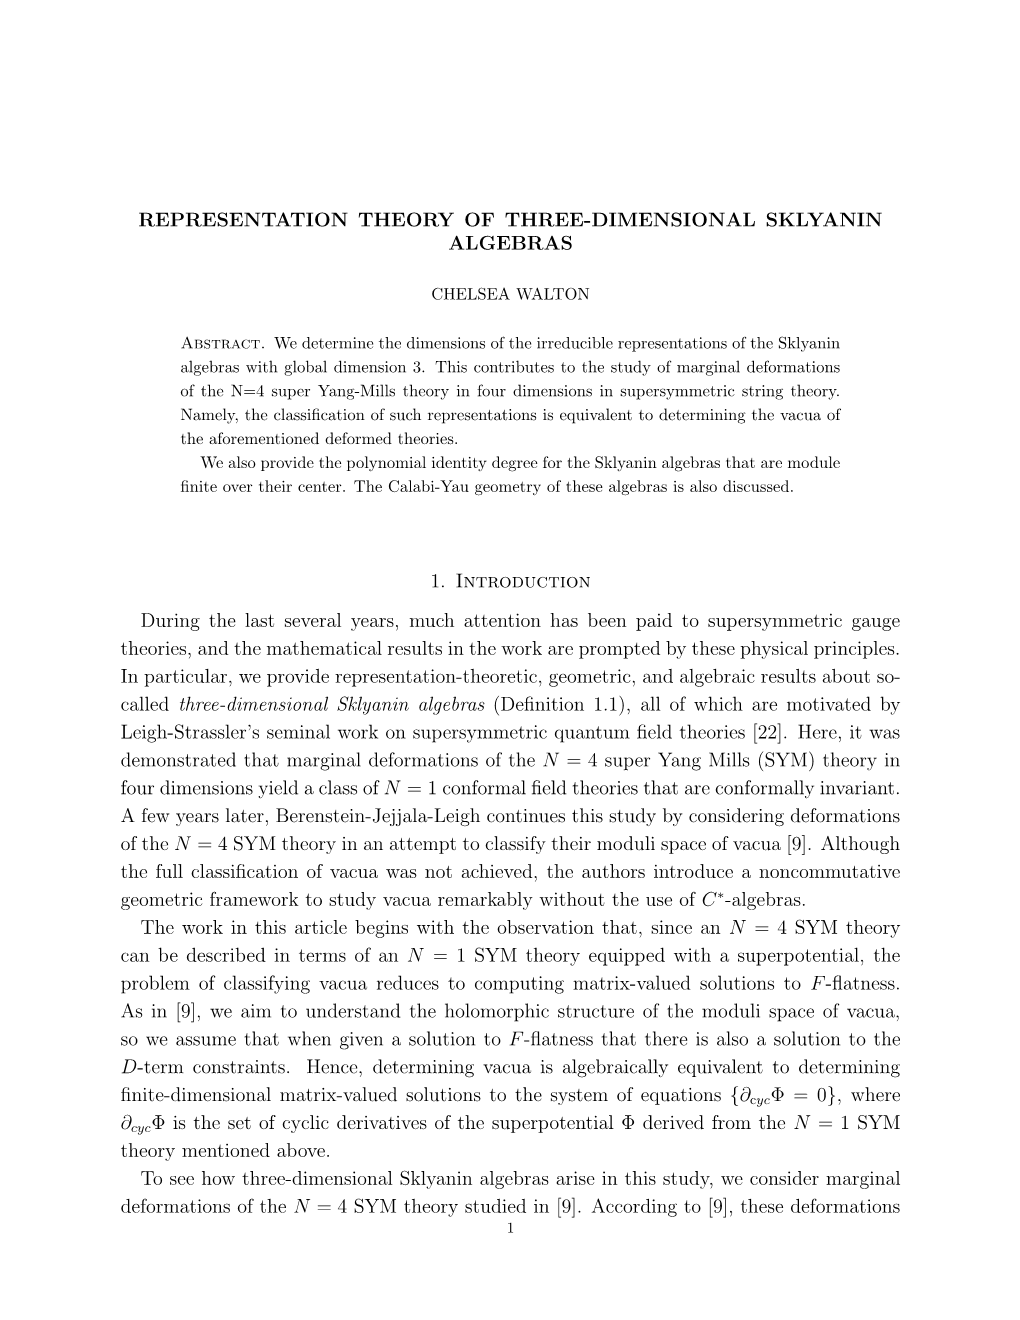 Representation Theory of Three-Dimensional Sklyanin Algebras